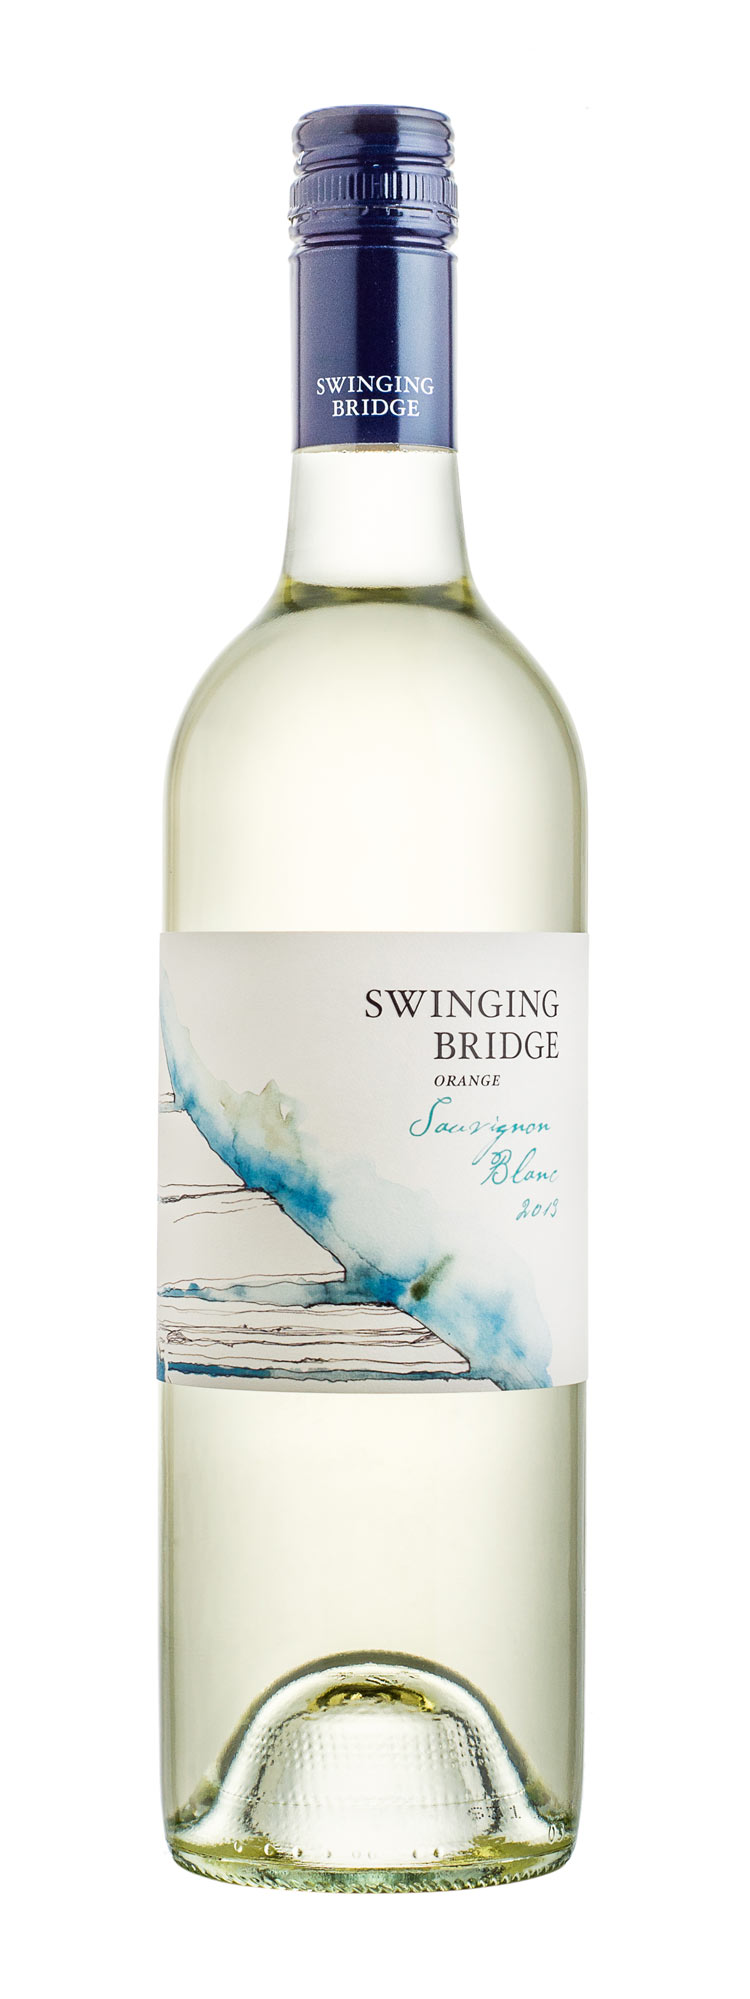 Swinging Bridge Estate Range Wine Label Design on bottle